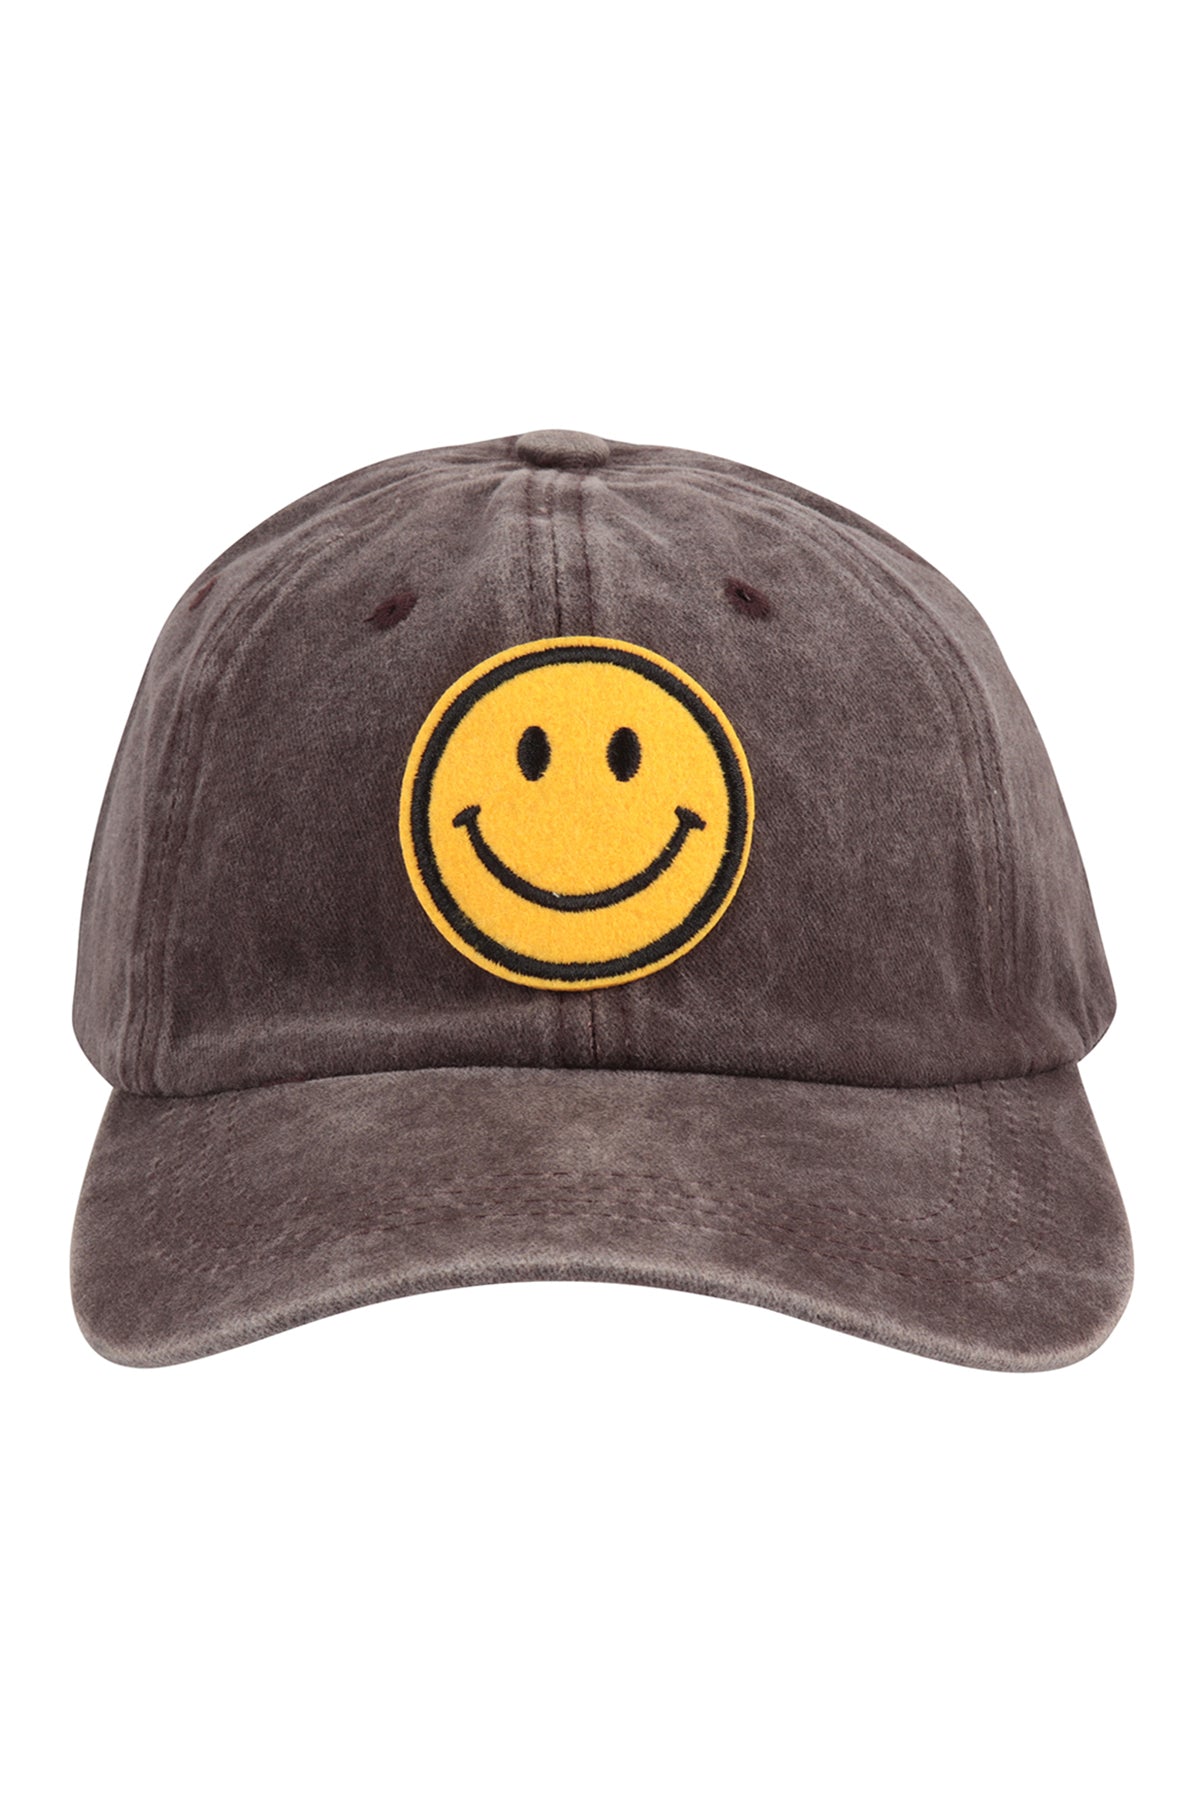 SMILEY LOGO ACID WASHED TEXTURED FASHION FASHION CAP